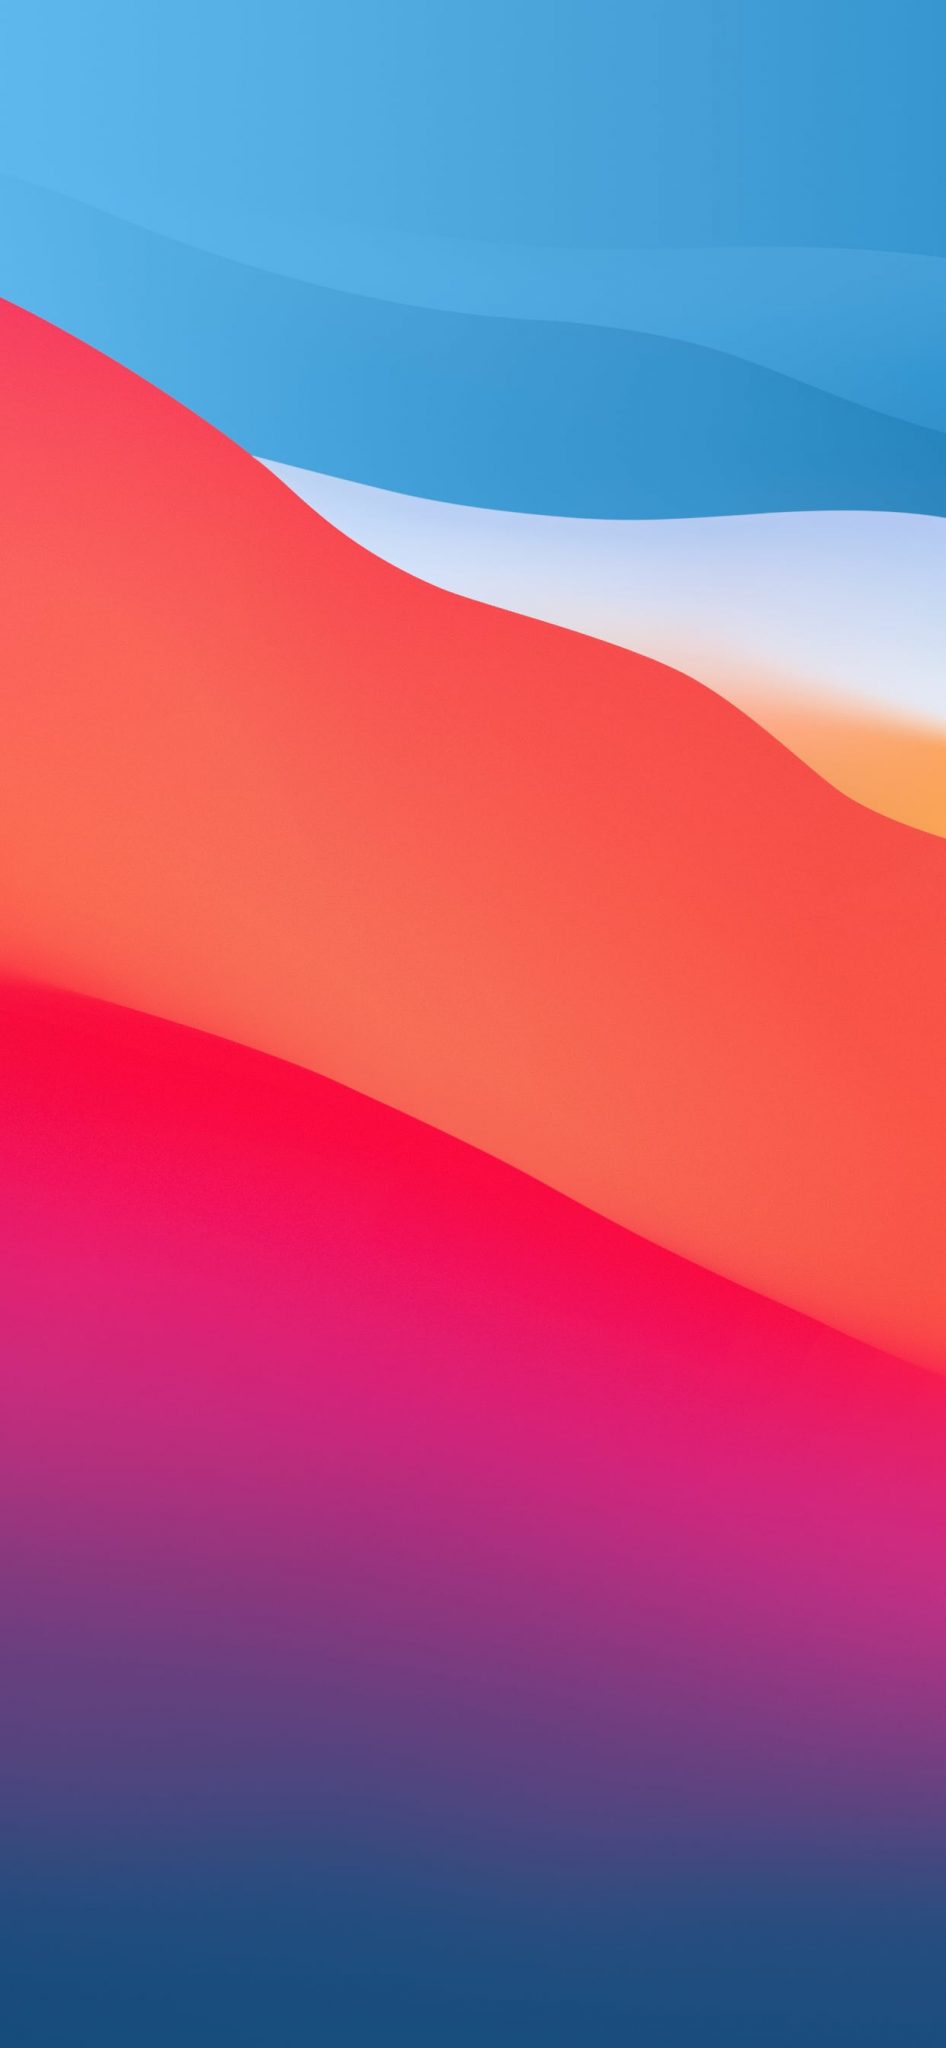 macOS Big Sur wallpaper for iPhone | Zollotech